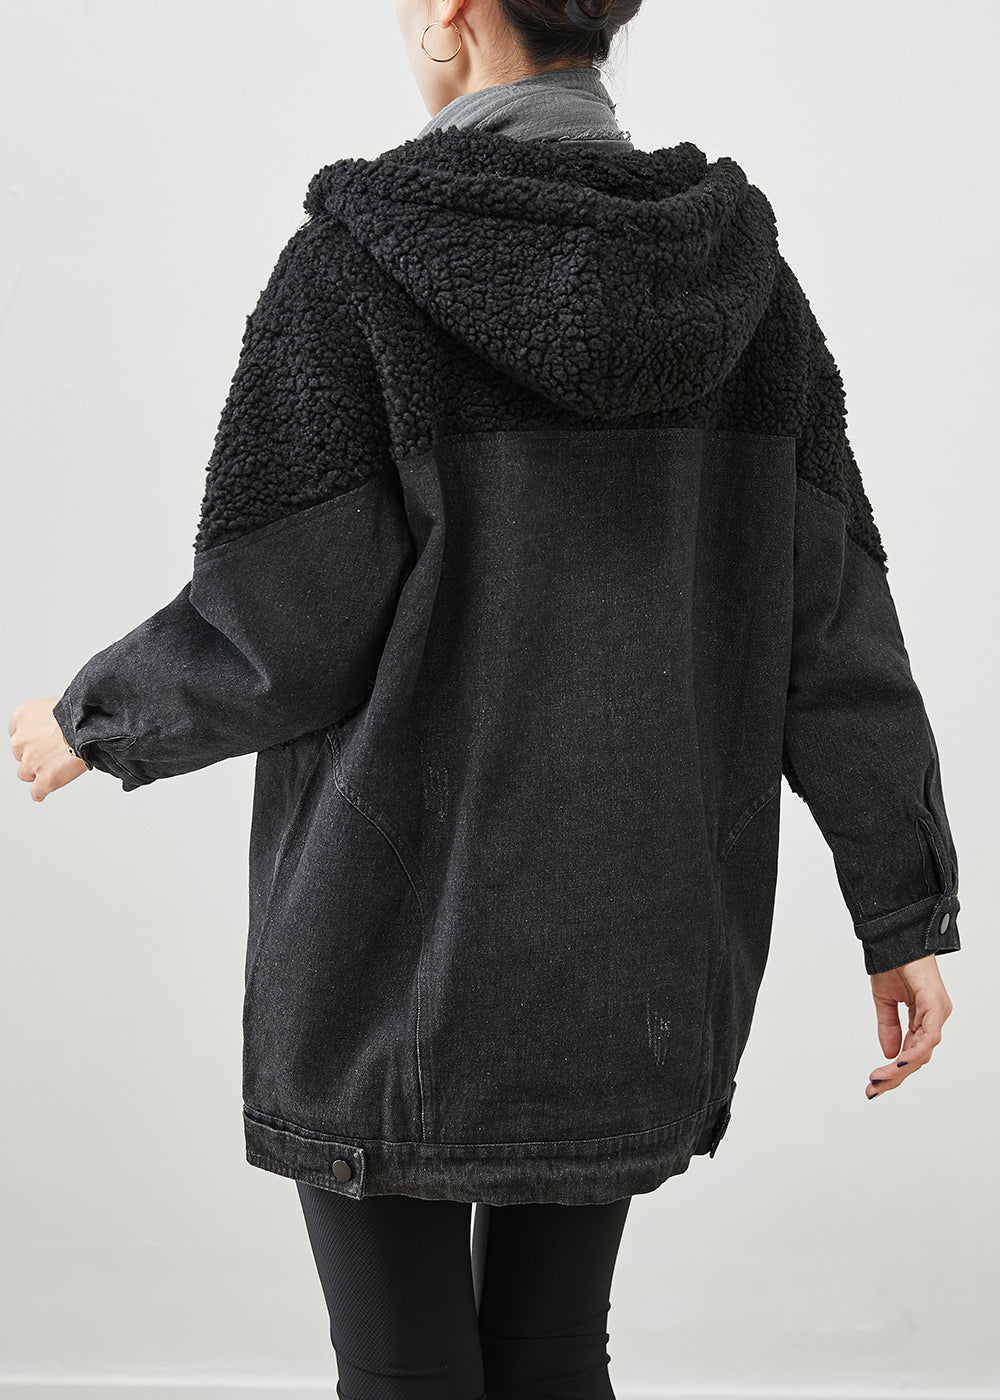 Unique Black Hooded Patchwork Woolen Denim Fine Cotton Filled Jackets Winter